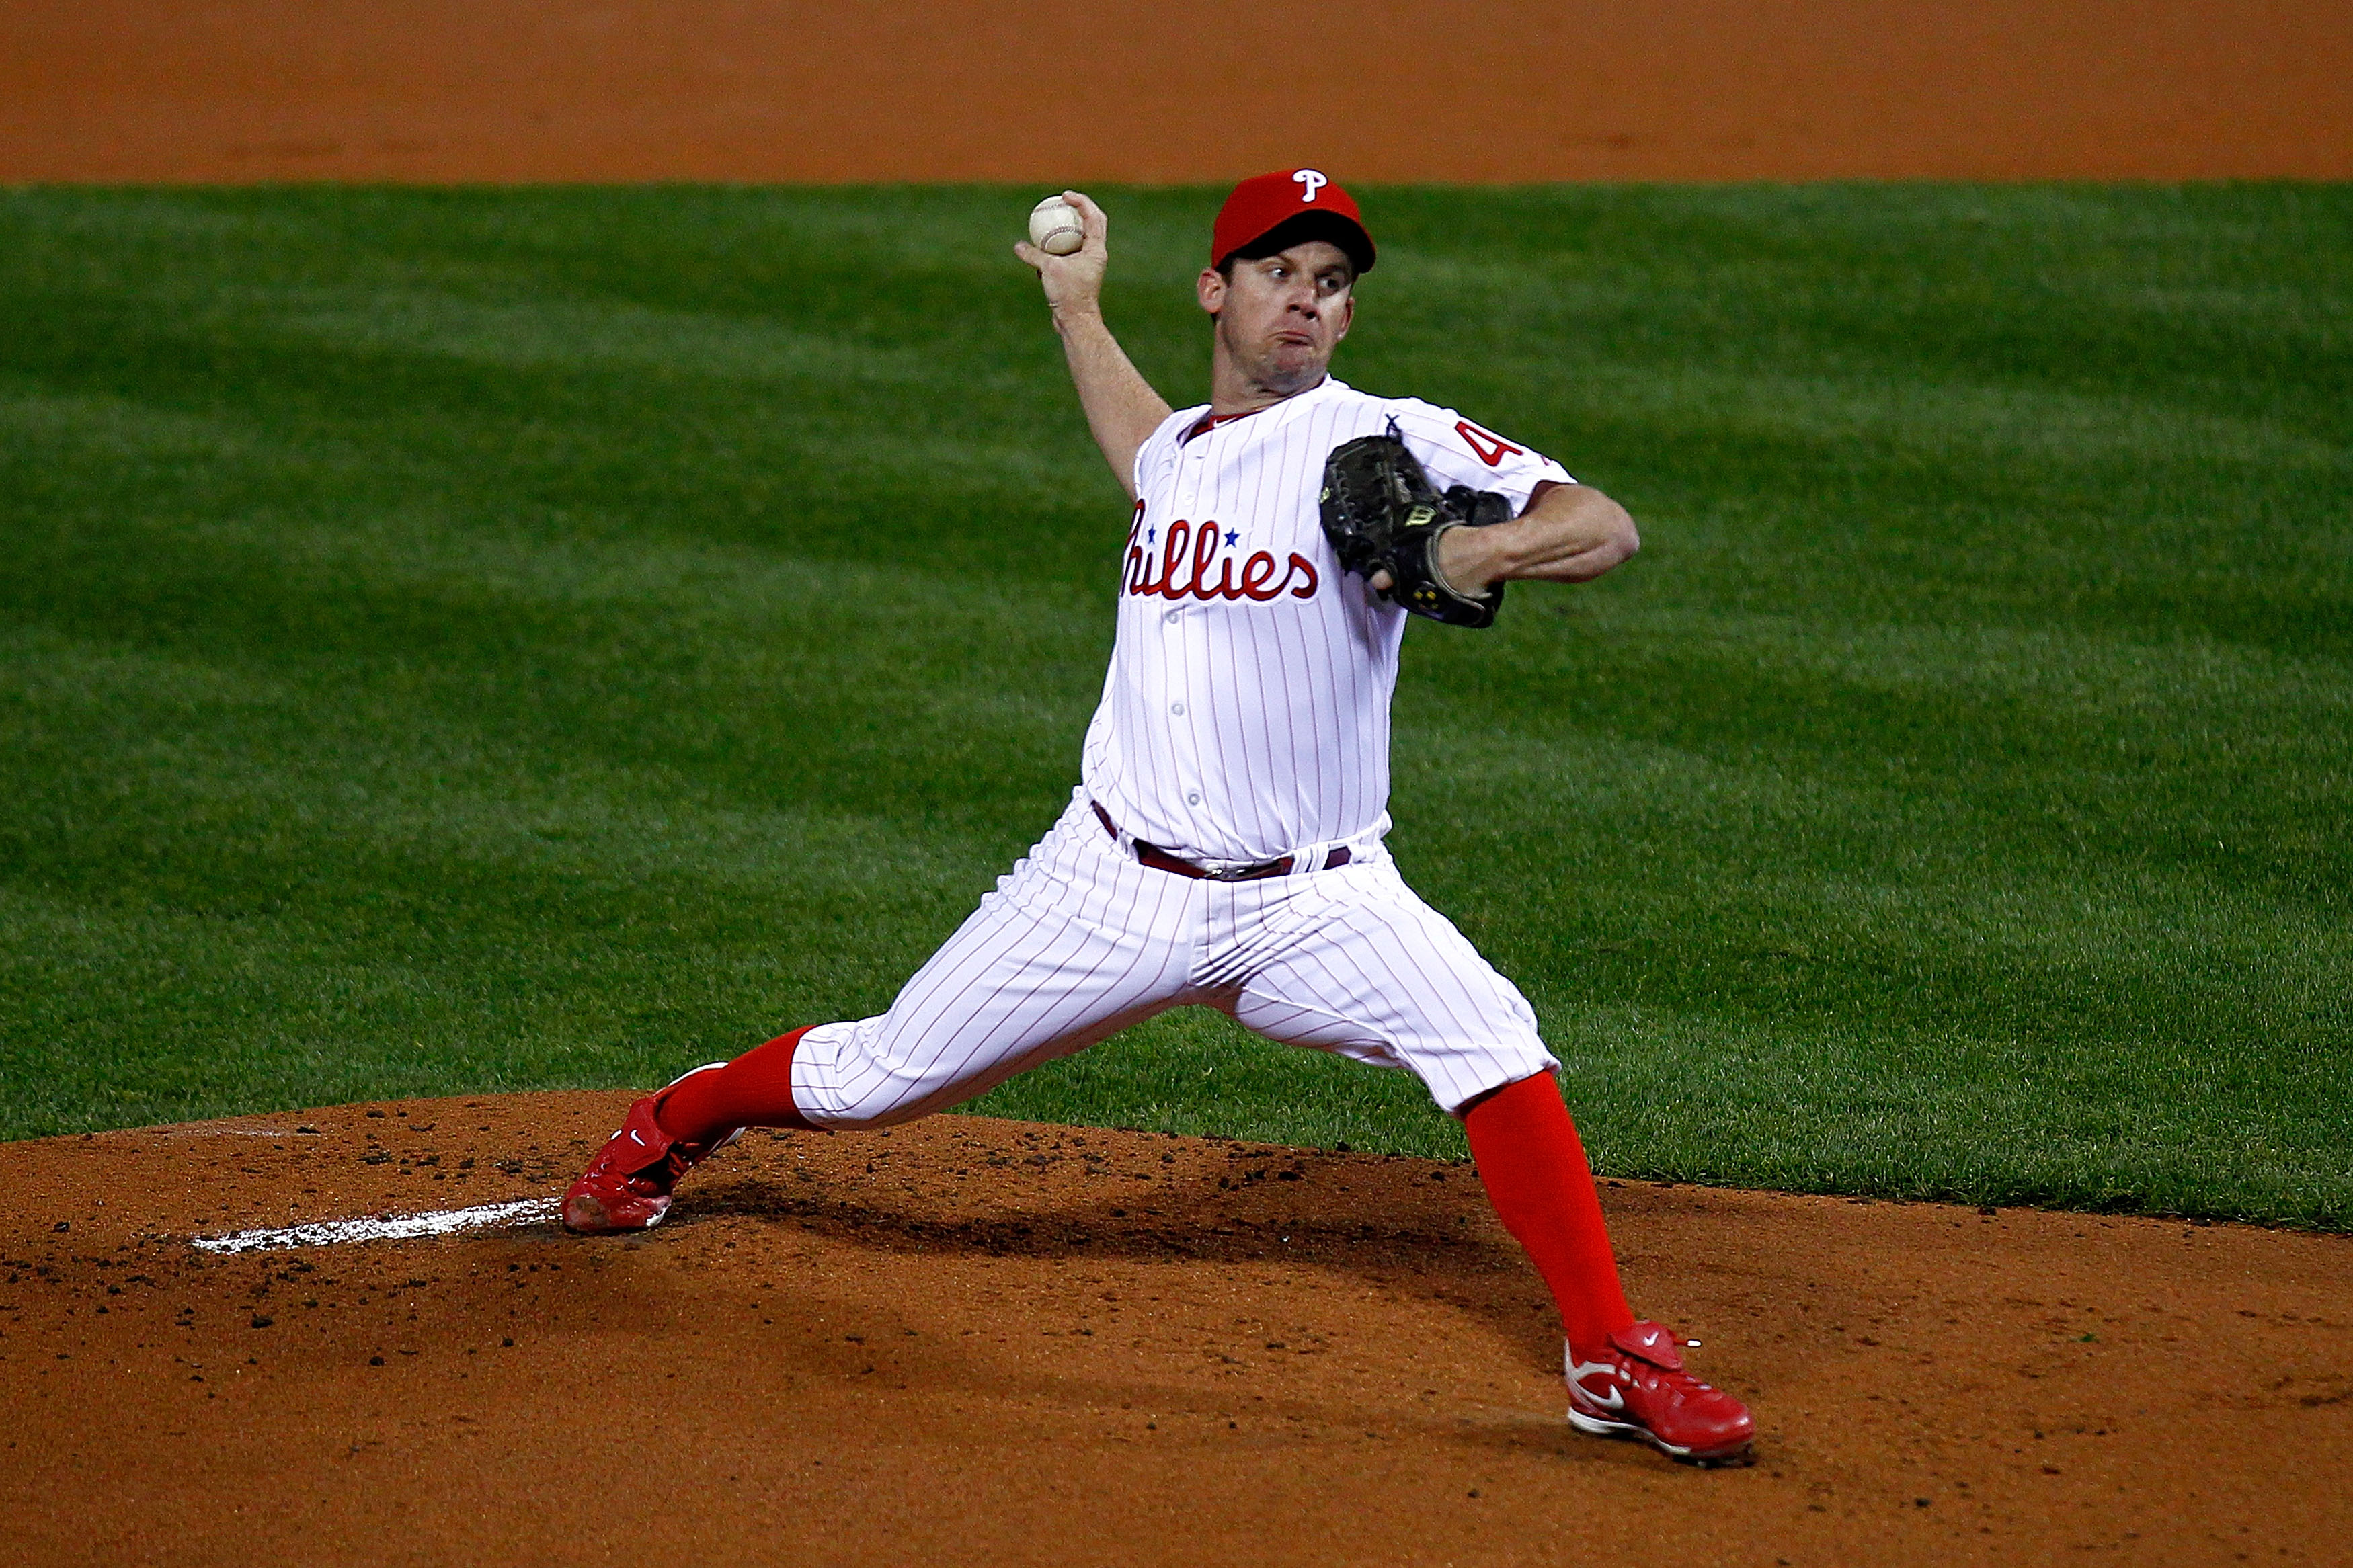 2010 Philadelphia Phillies season - Wikipedia